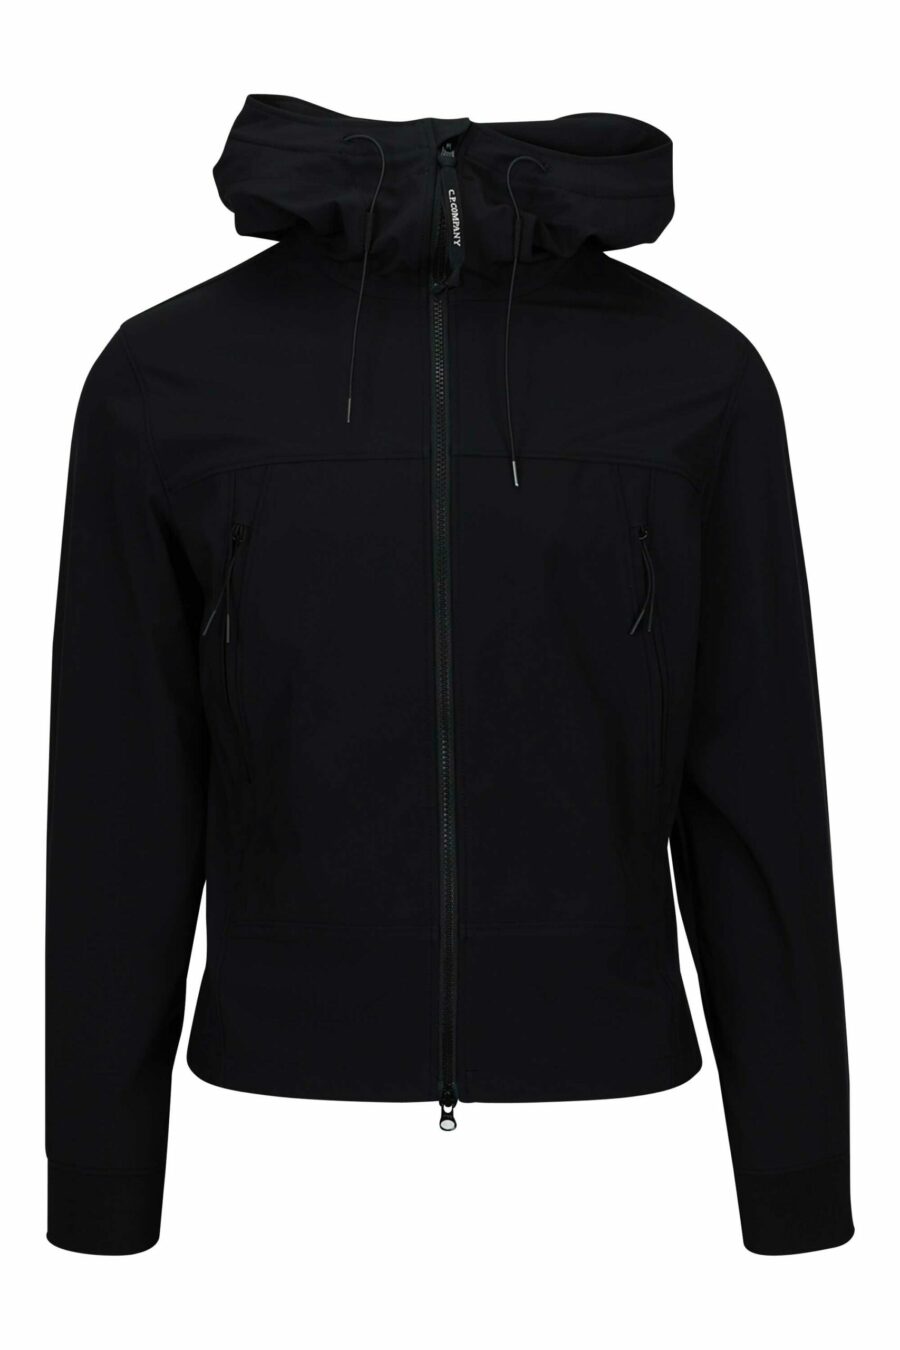 Black jacket with goggle logo and hood - 7620943709728 scaled